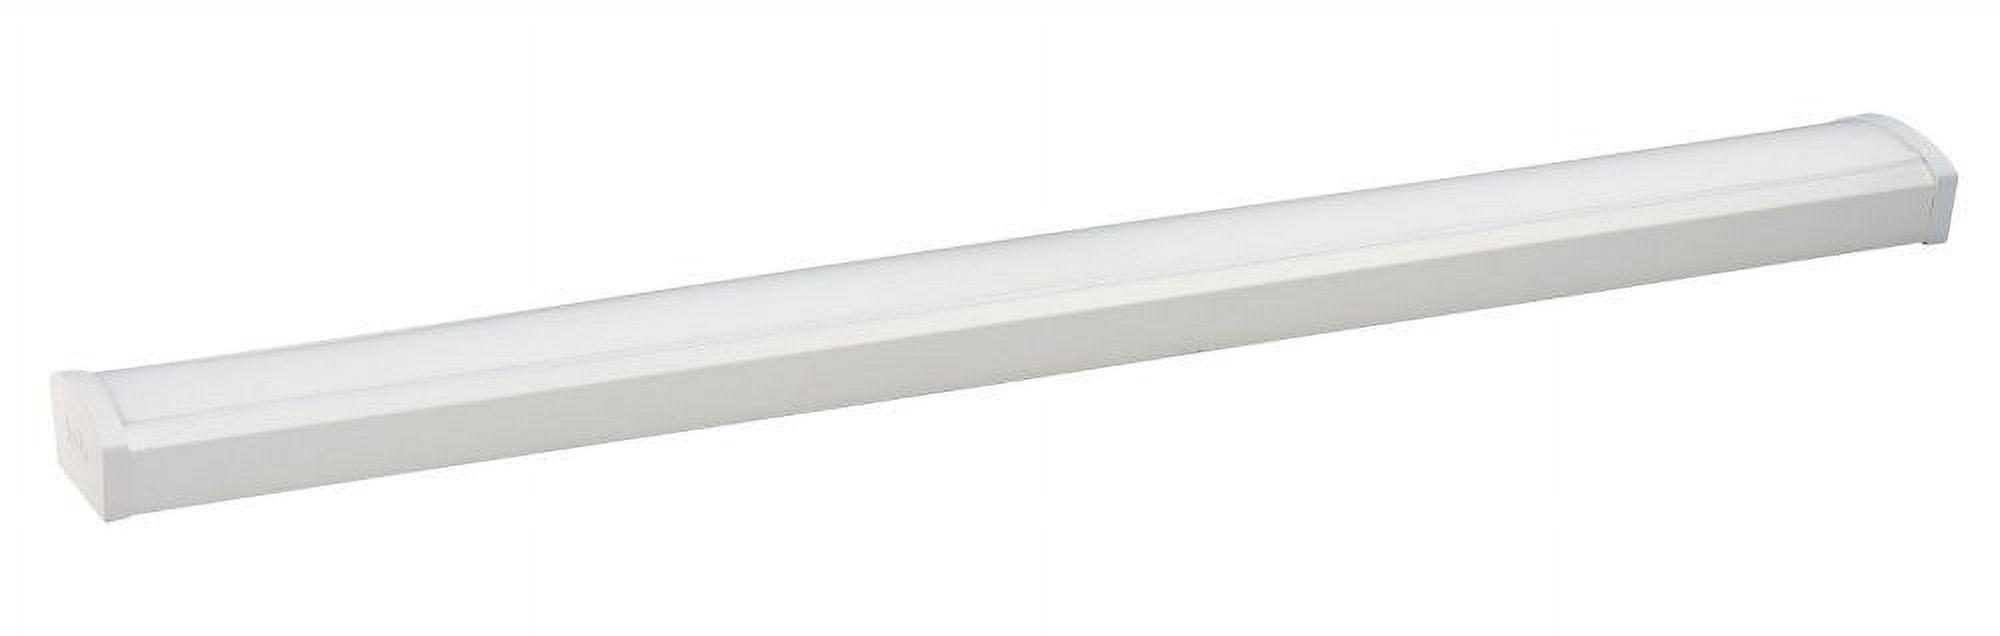 Sleek White Polycarbonate 48" LED Ceiling Wrap Light, Energy Star Rated